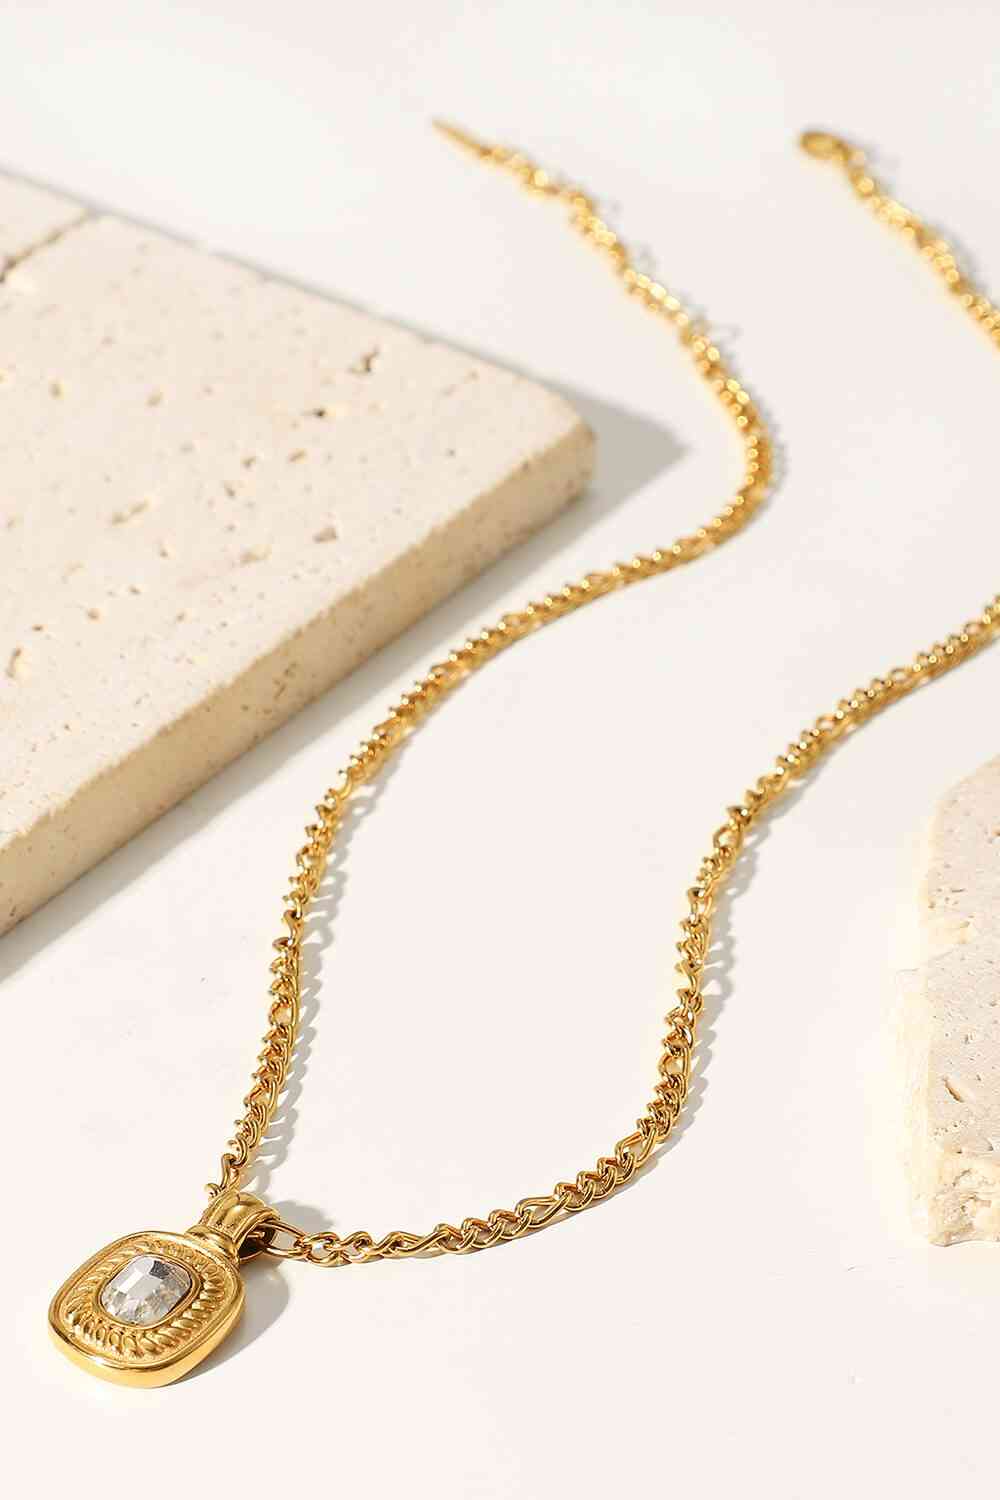 18K Gold Plated Inlaid Rhinestone Pendant Necklace